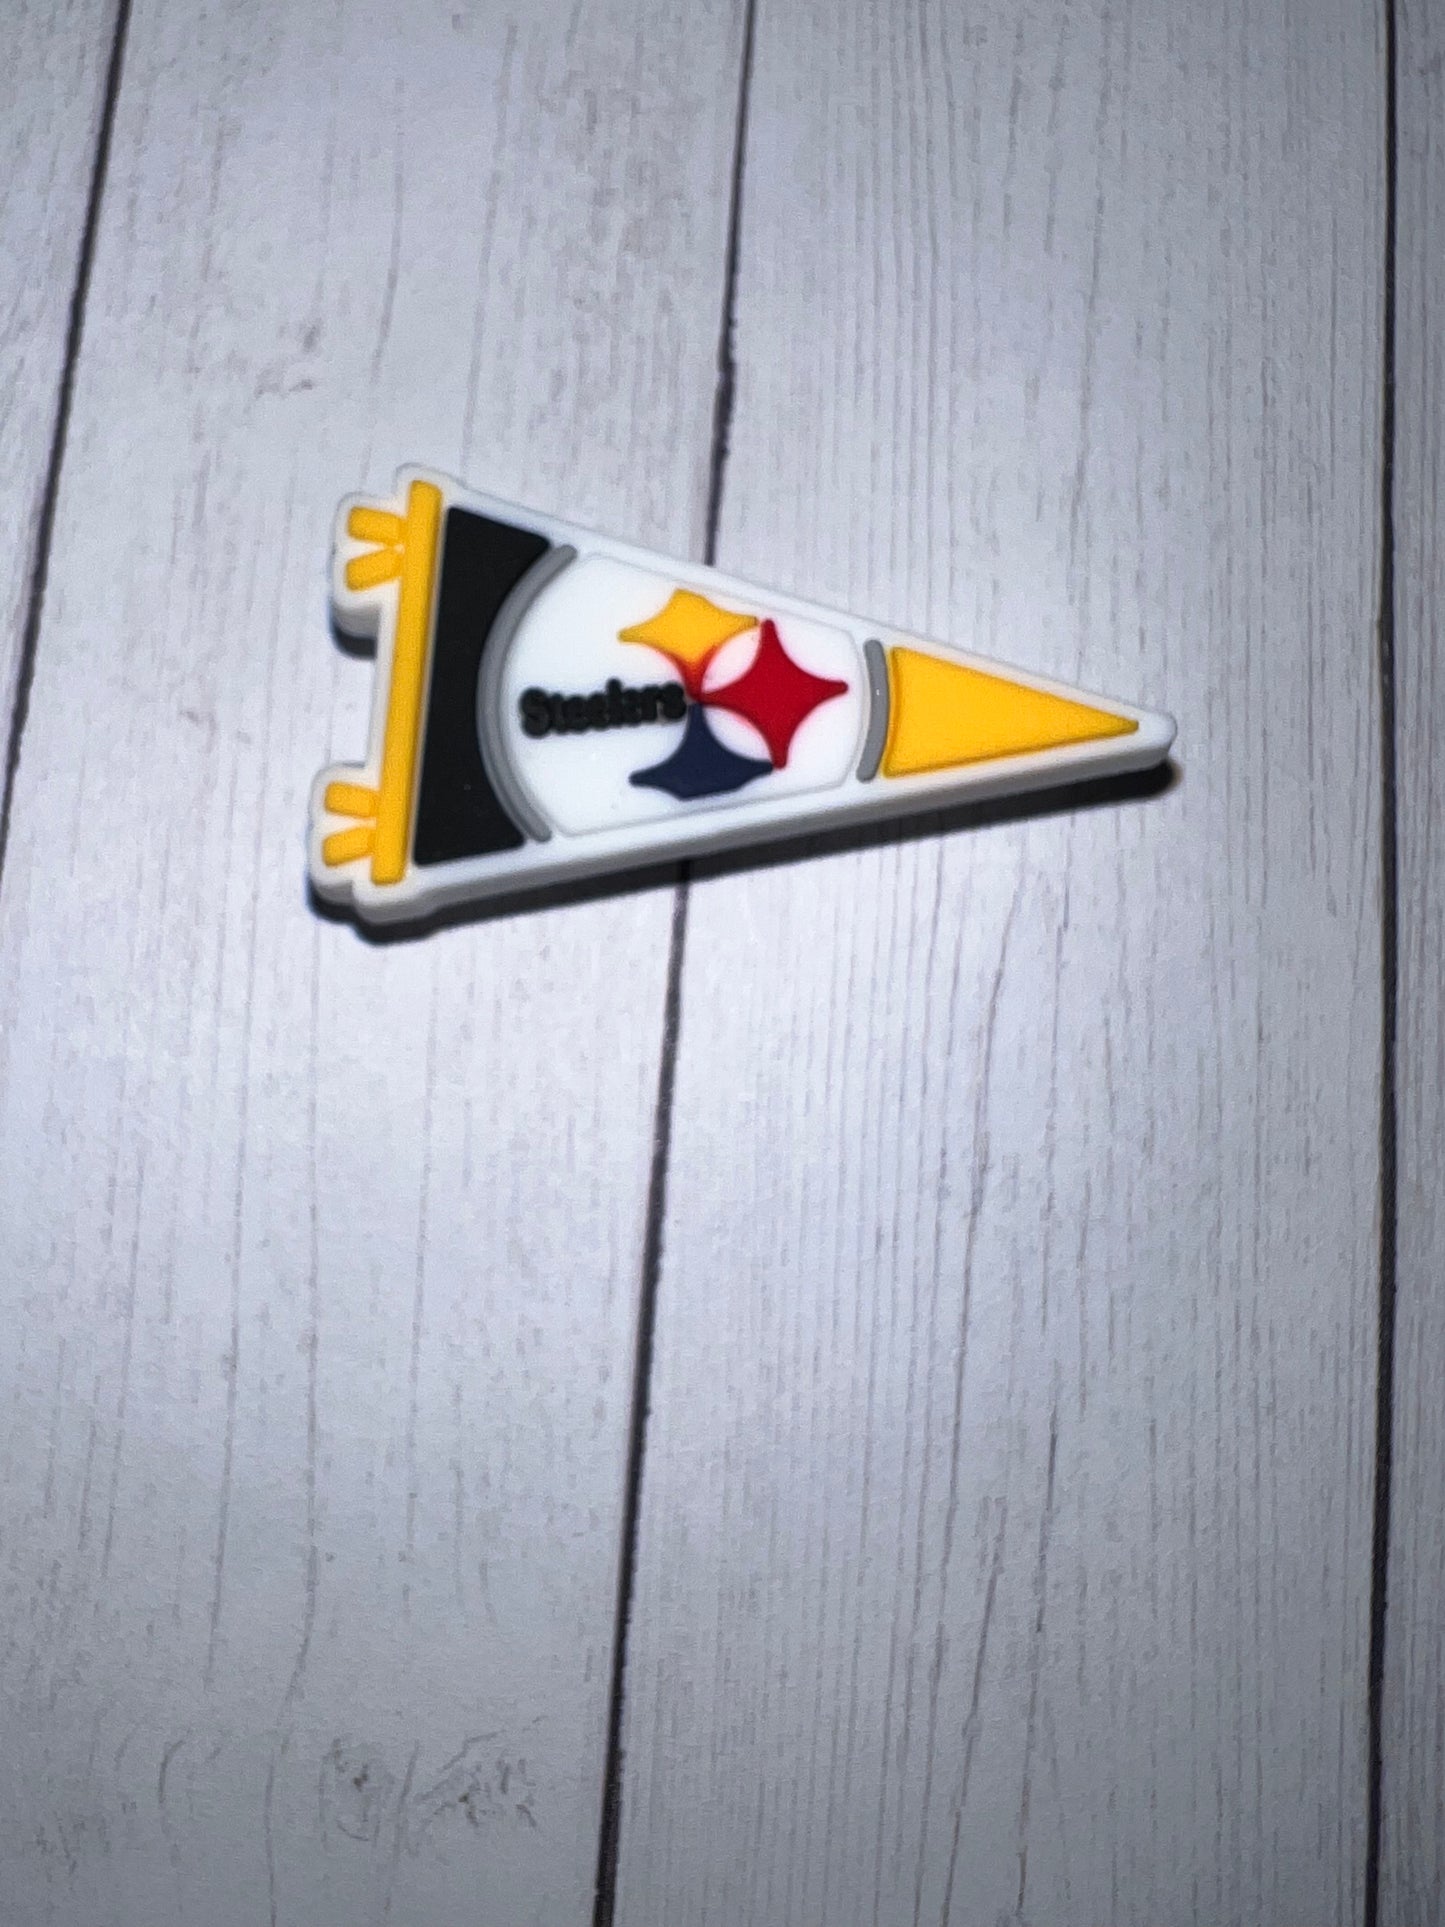 NFL Flag Croc Charms